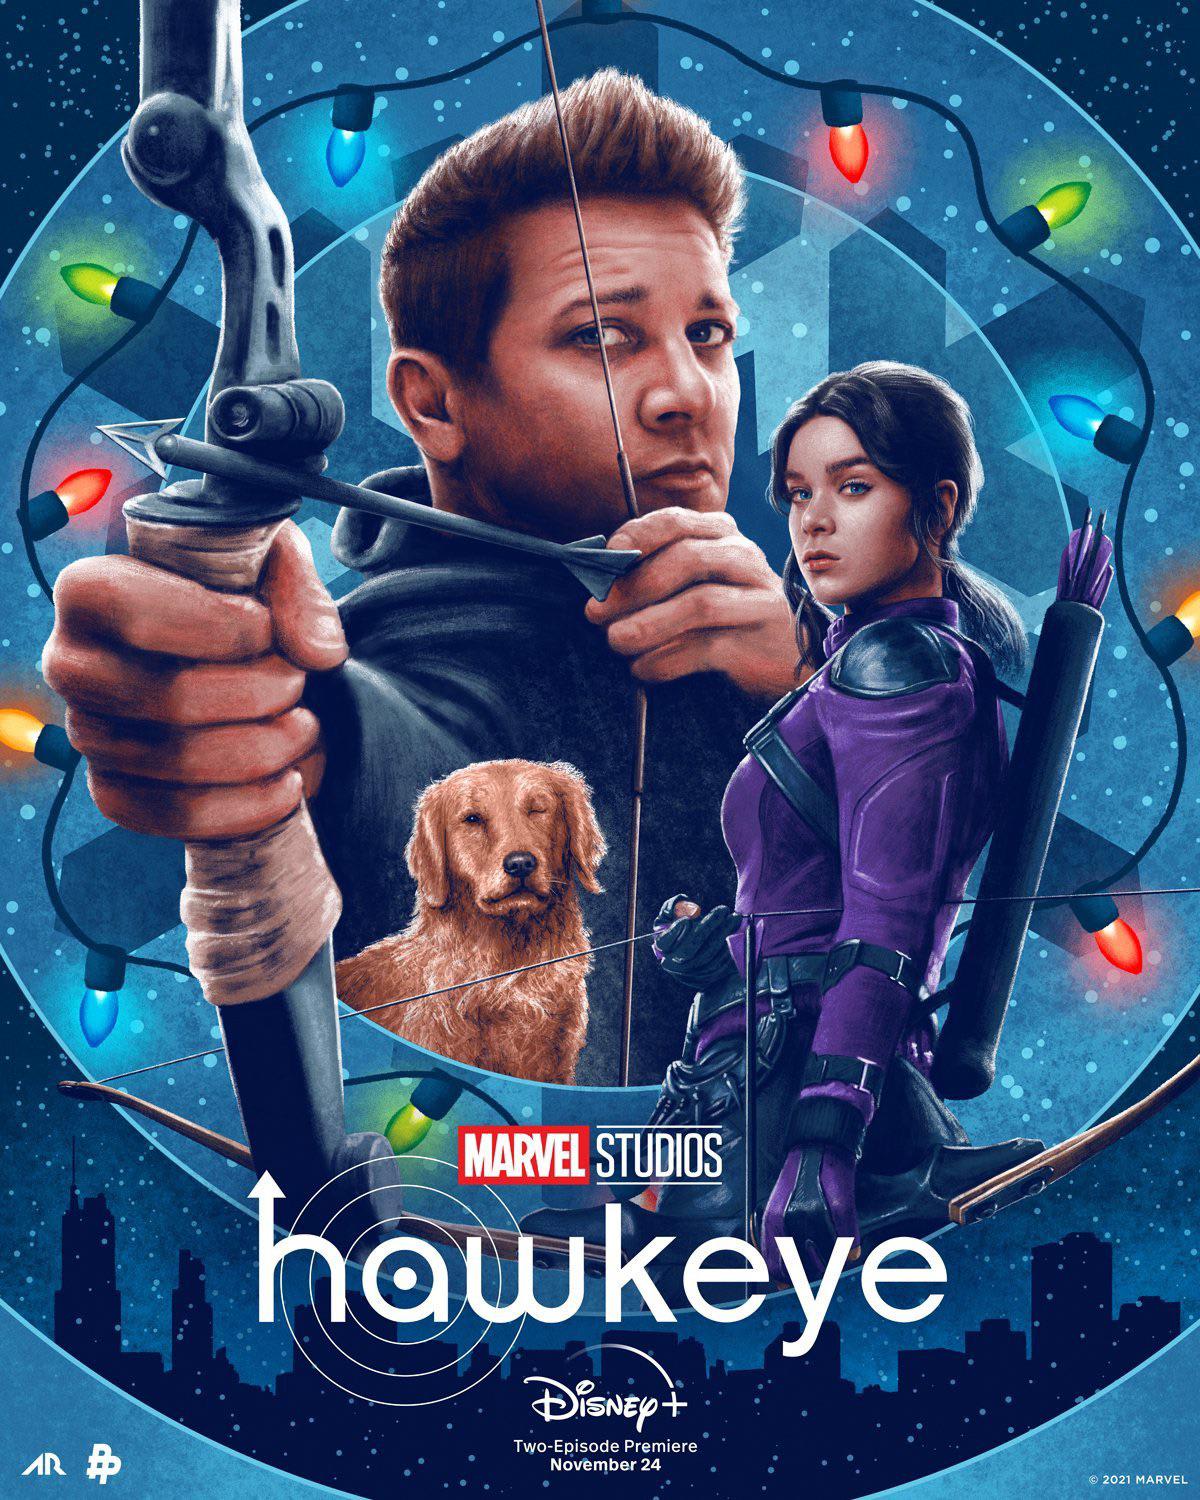 My favorite Hawkeye poster